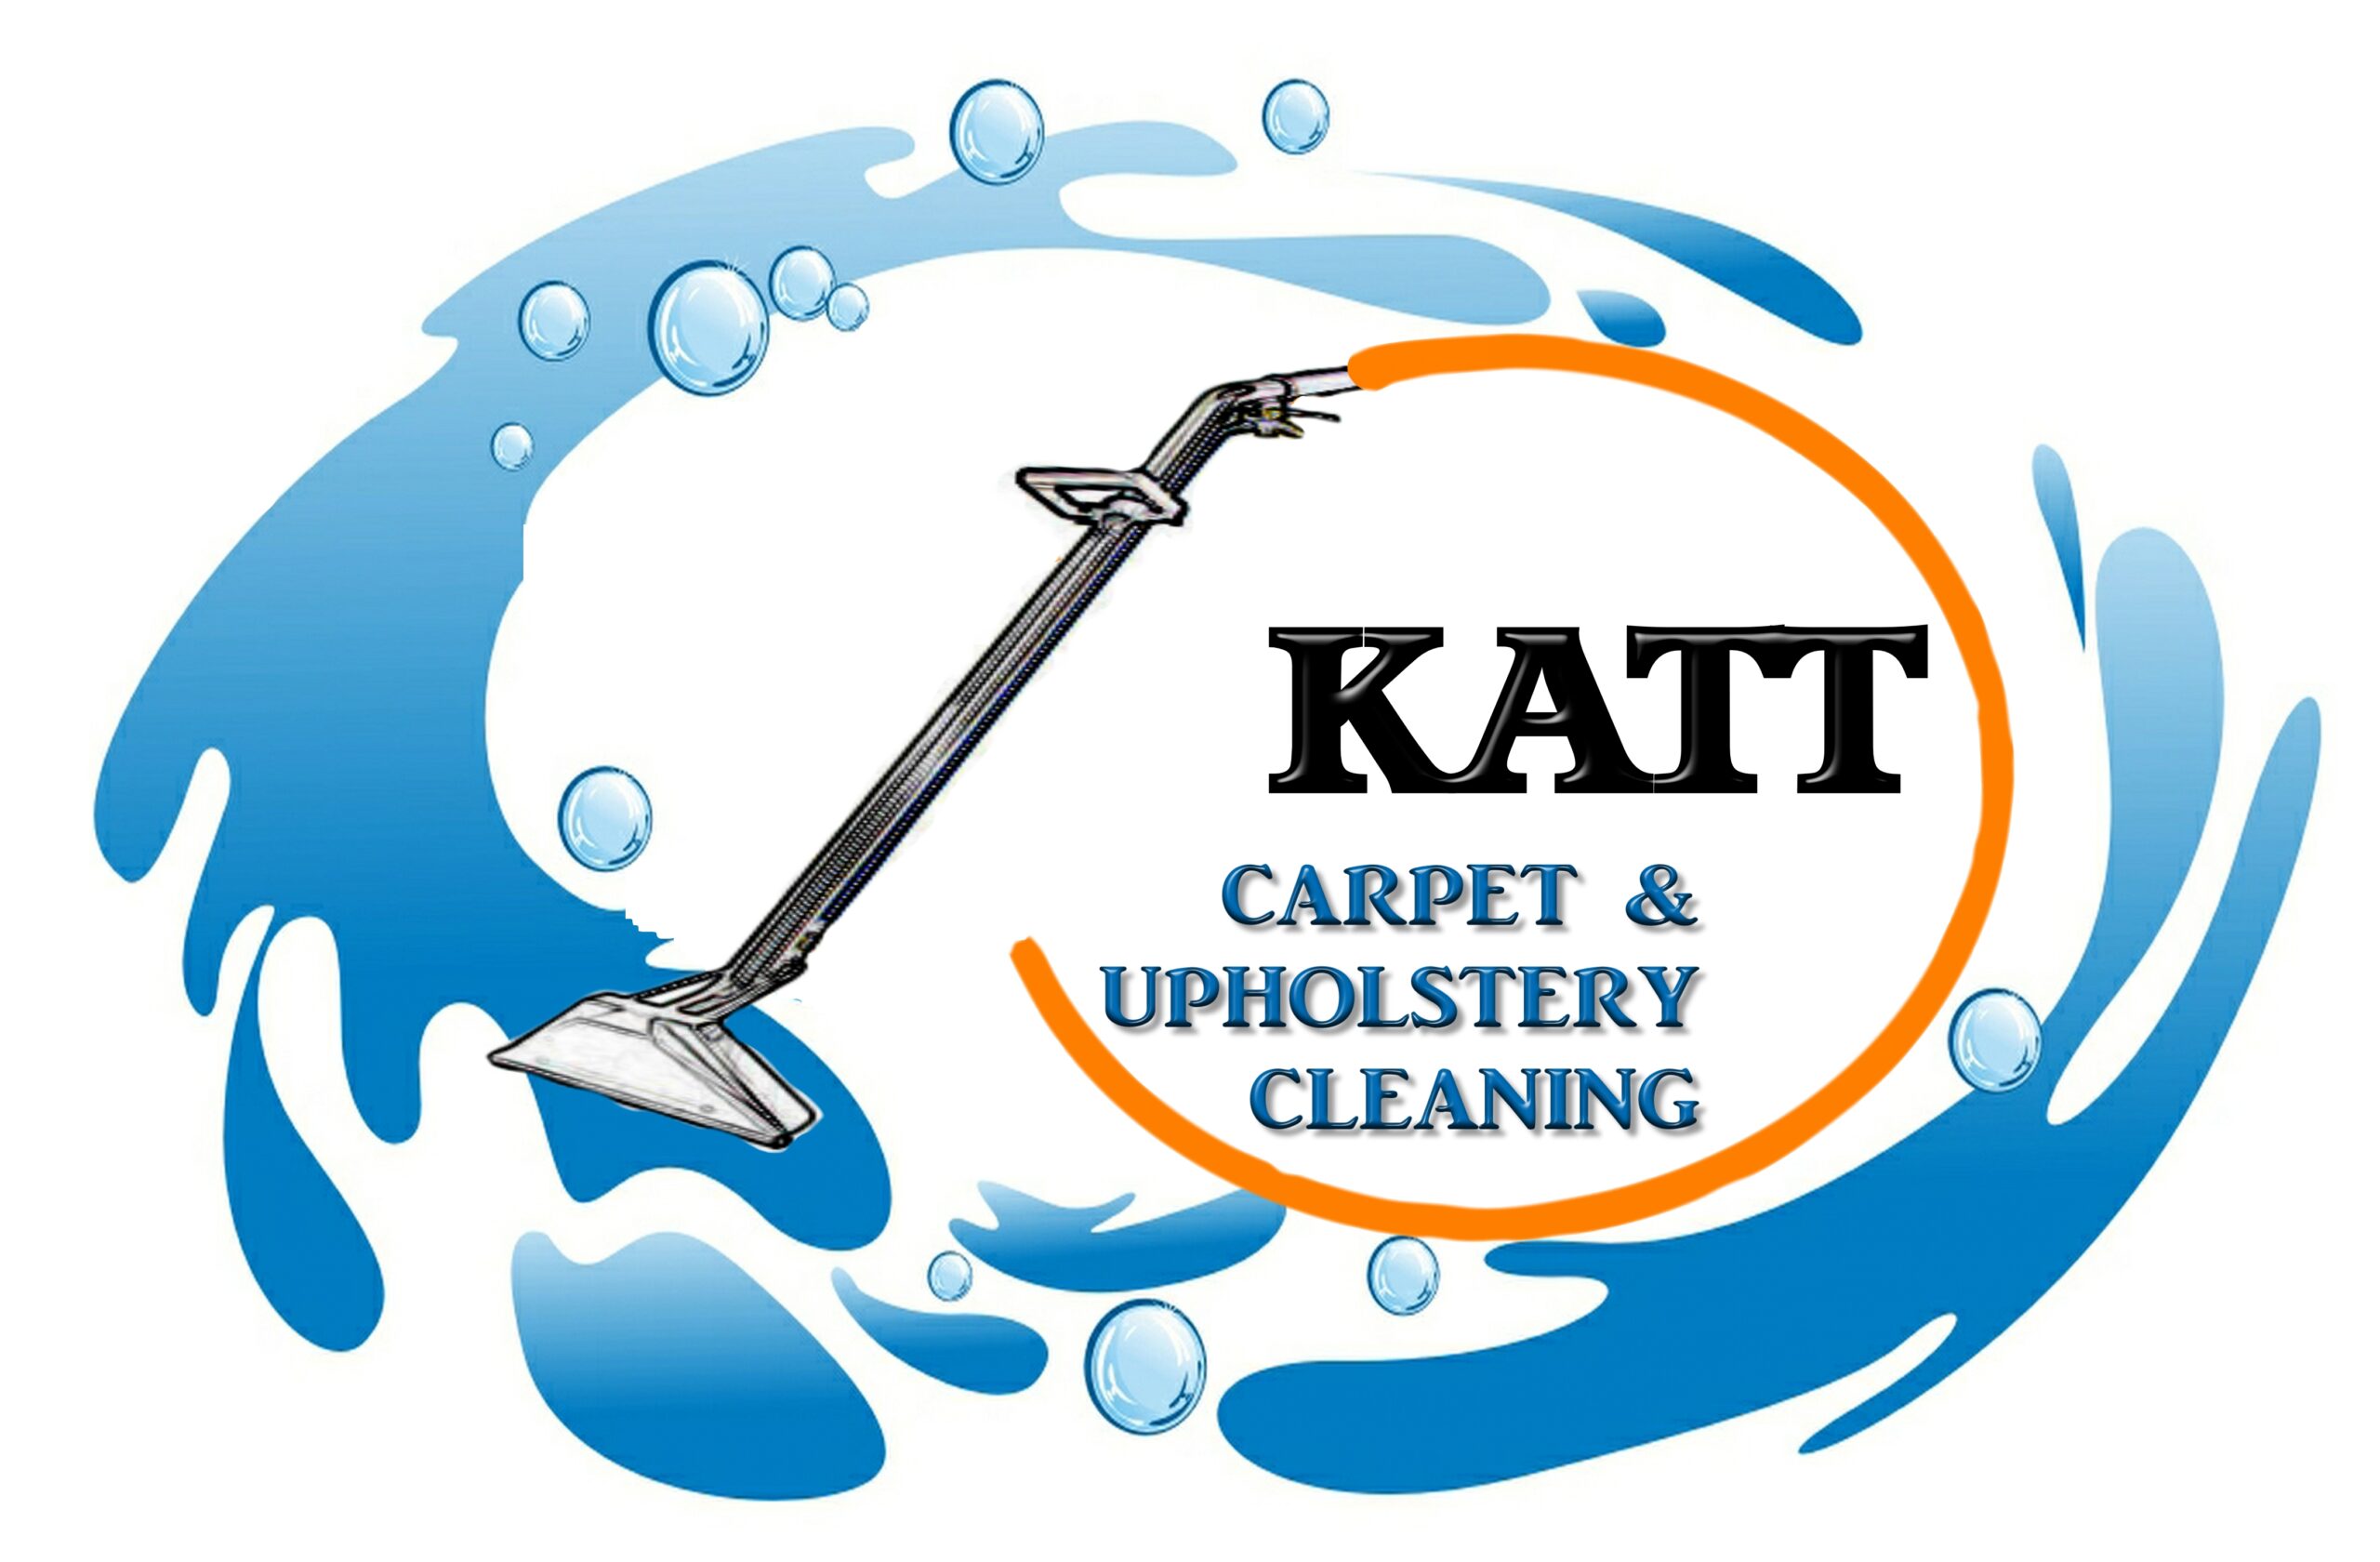 Katt Carpet and Upholstery Cleaning